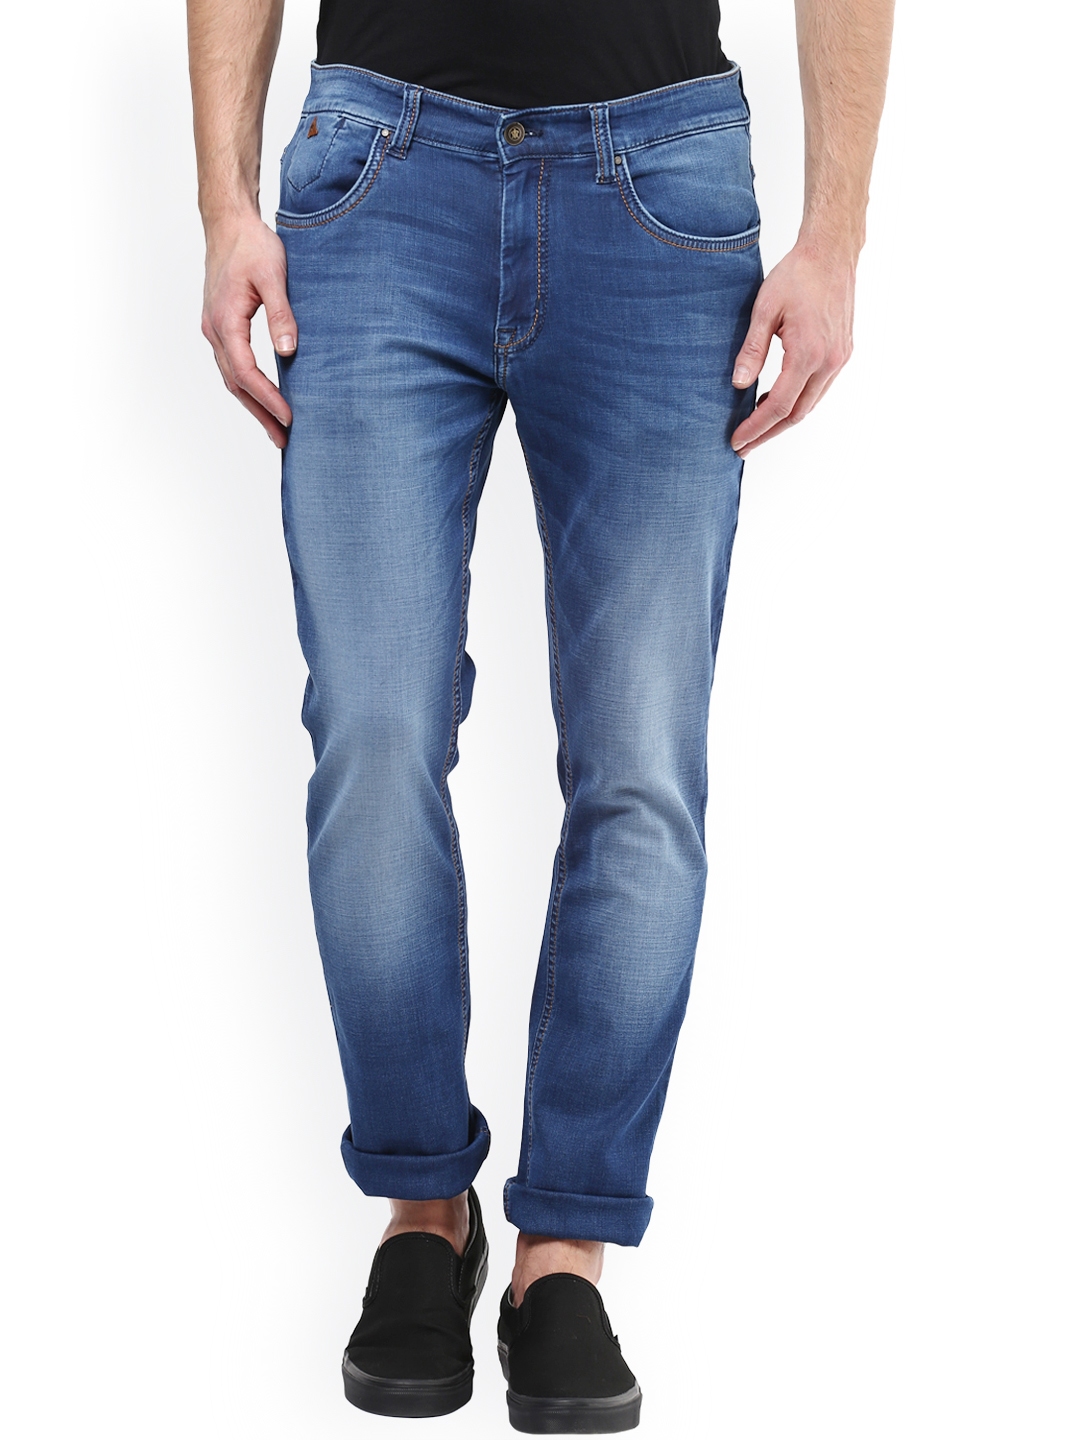 Buy Turtle Blue Slim Jeans - Jeans for Men 1406940 | Myntra